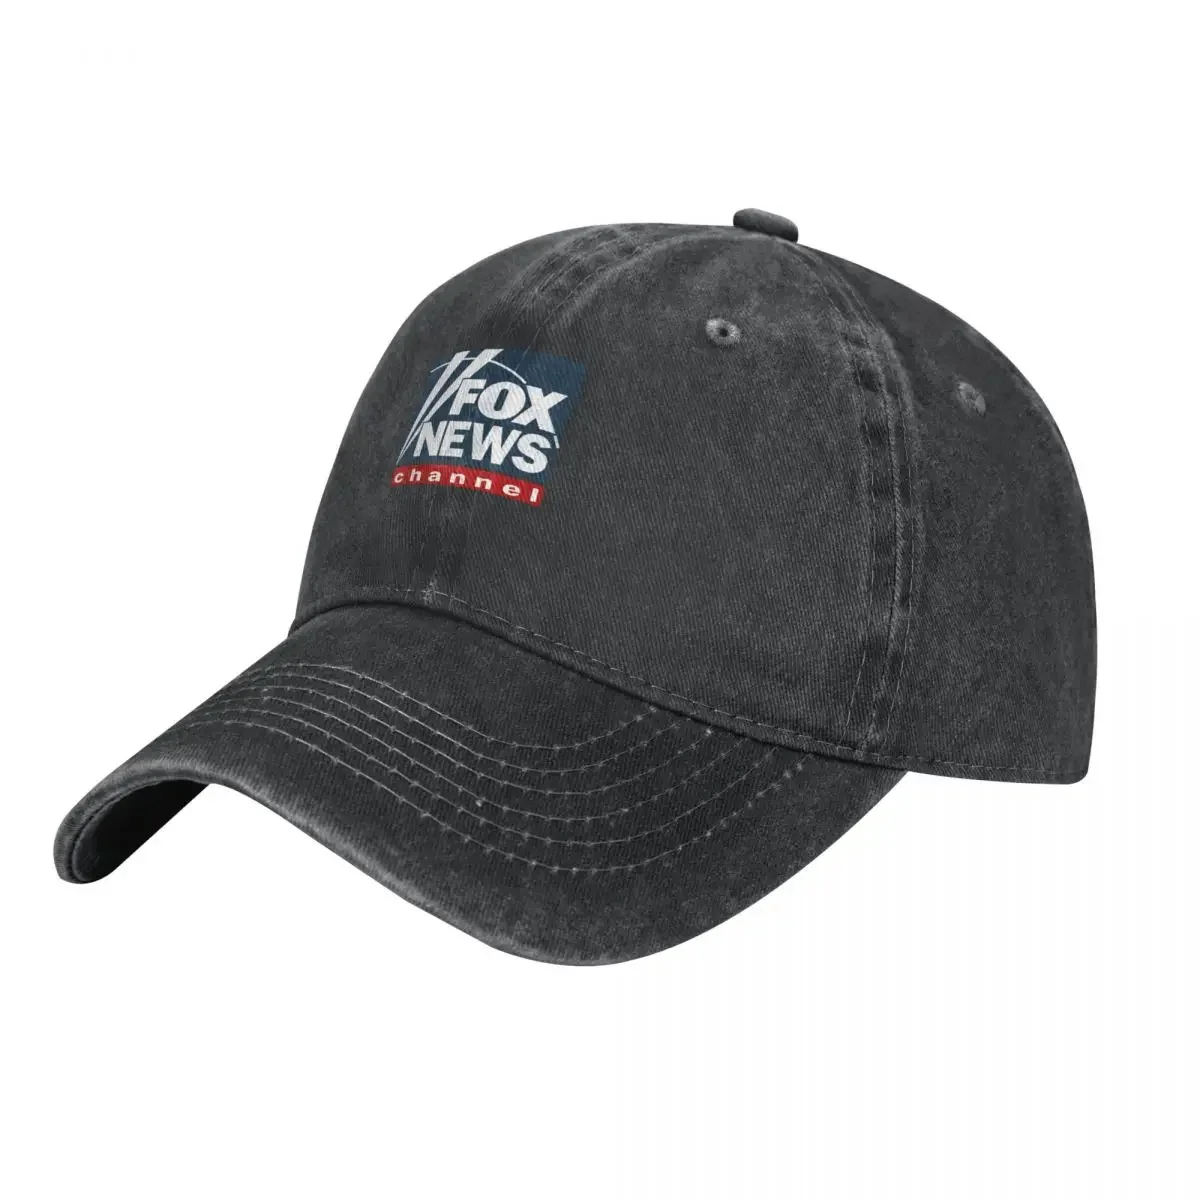 

F o x news logo Cowboy Hat foam party Hat Snapback Cap Sunhat Dropshipping Golf Men Women's